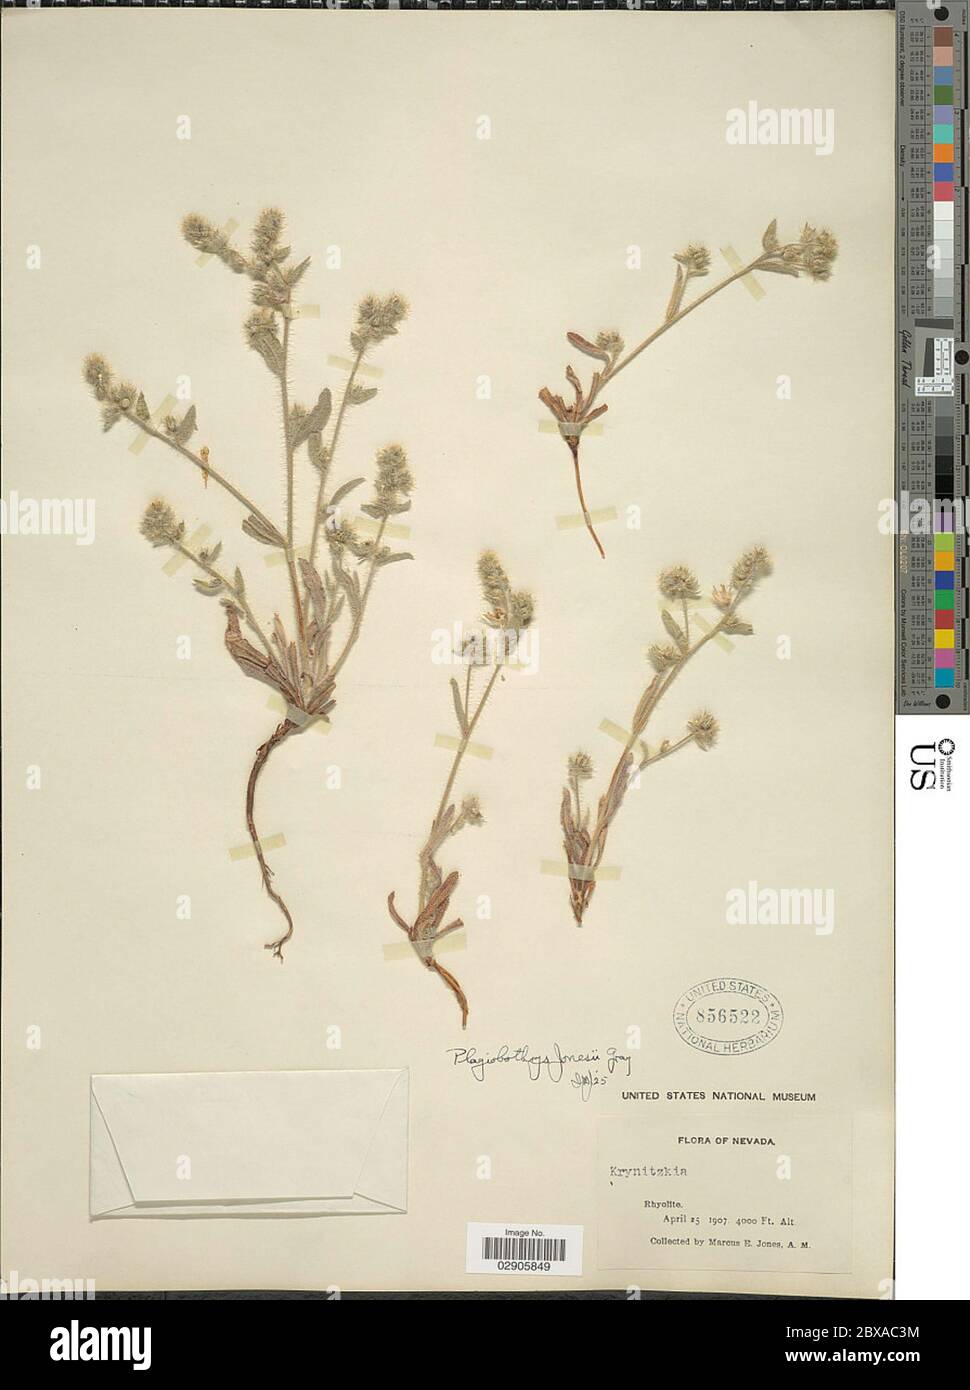 Plagiobothrys jonesii A Gray Plagiobothrys jonesii A Gray. Stock Photo